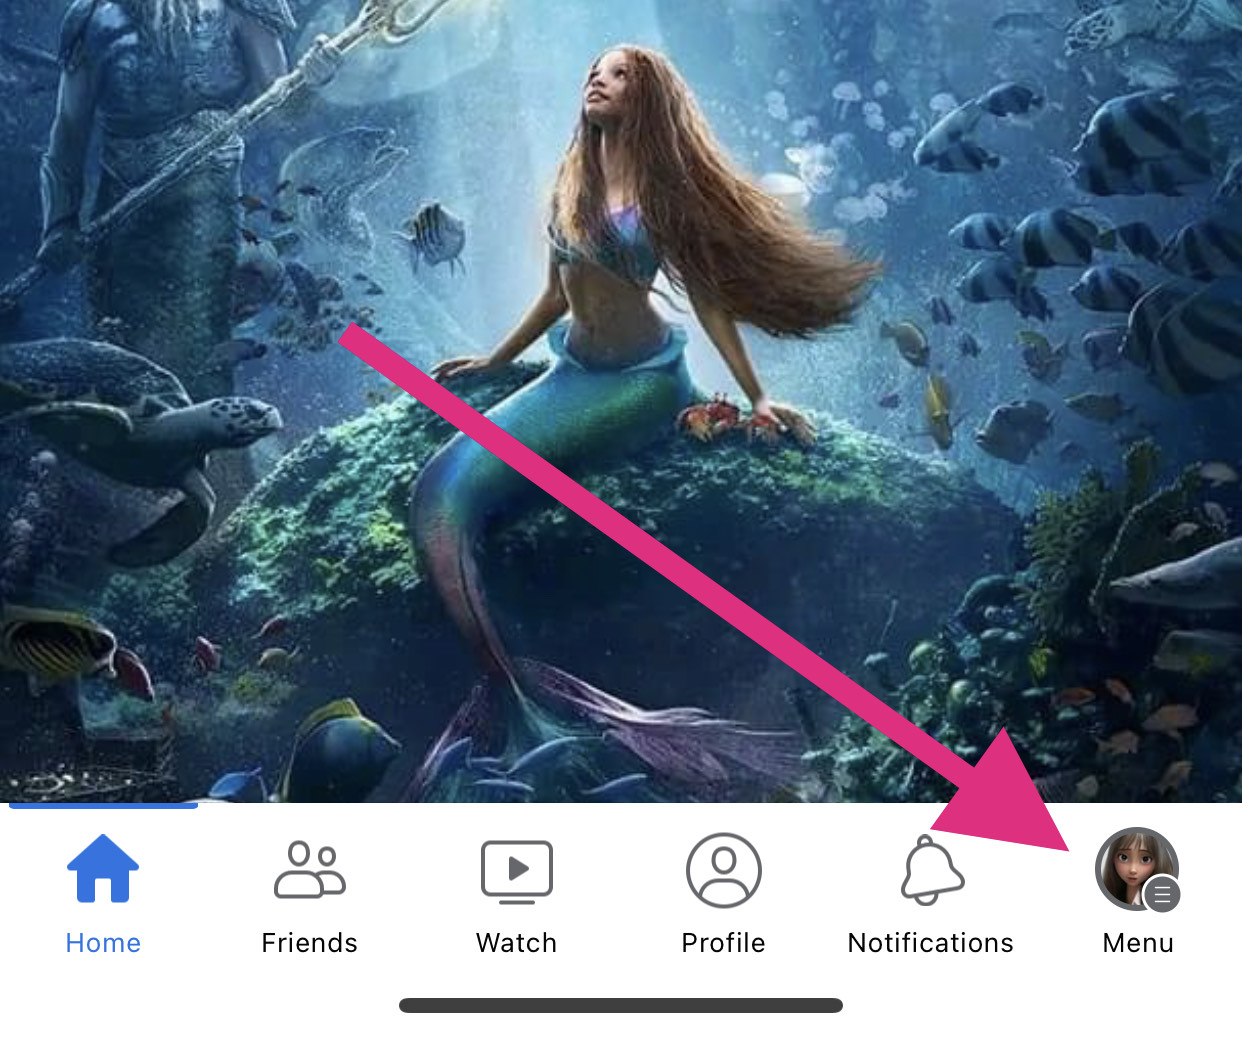 facebook app - shoing the hambuger button/profile icon